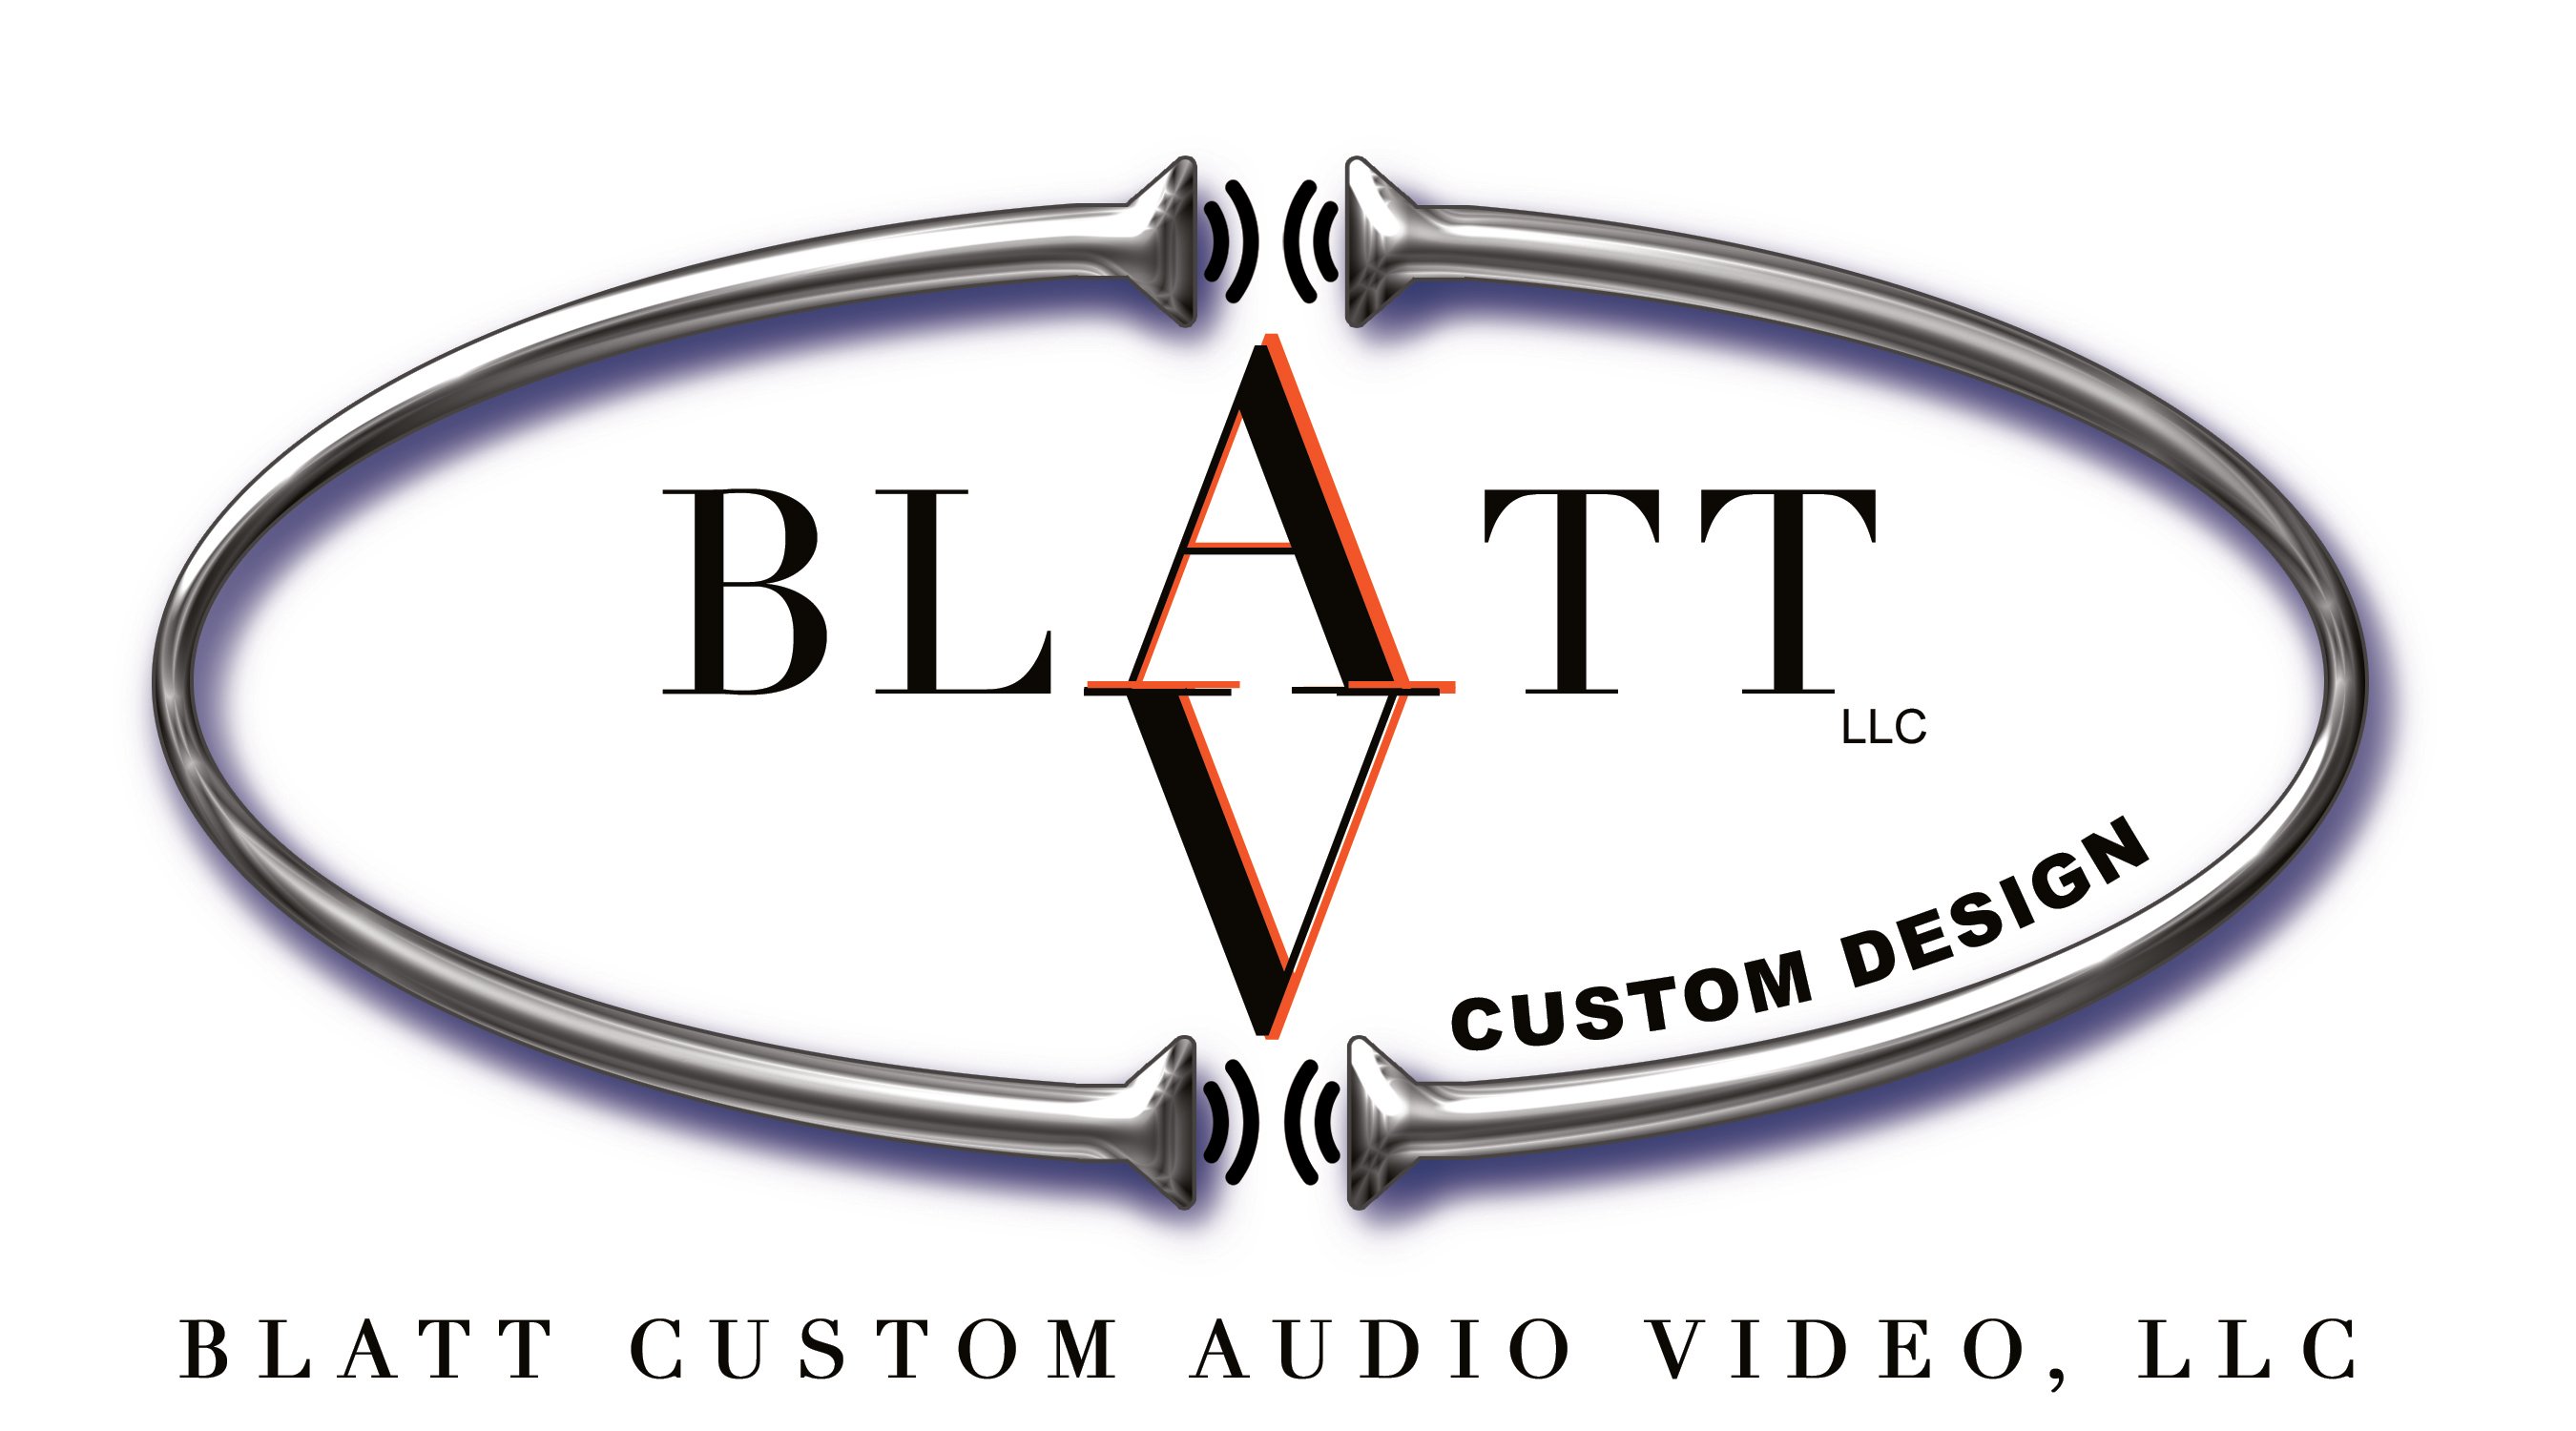 Blatt Custom Audio Video, LLC Logo